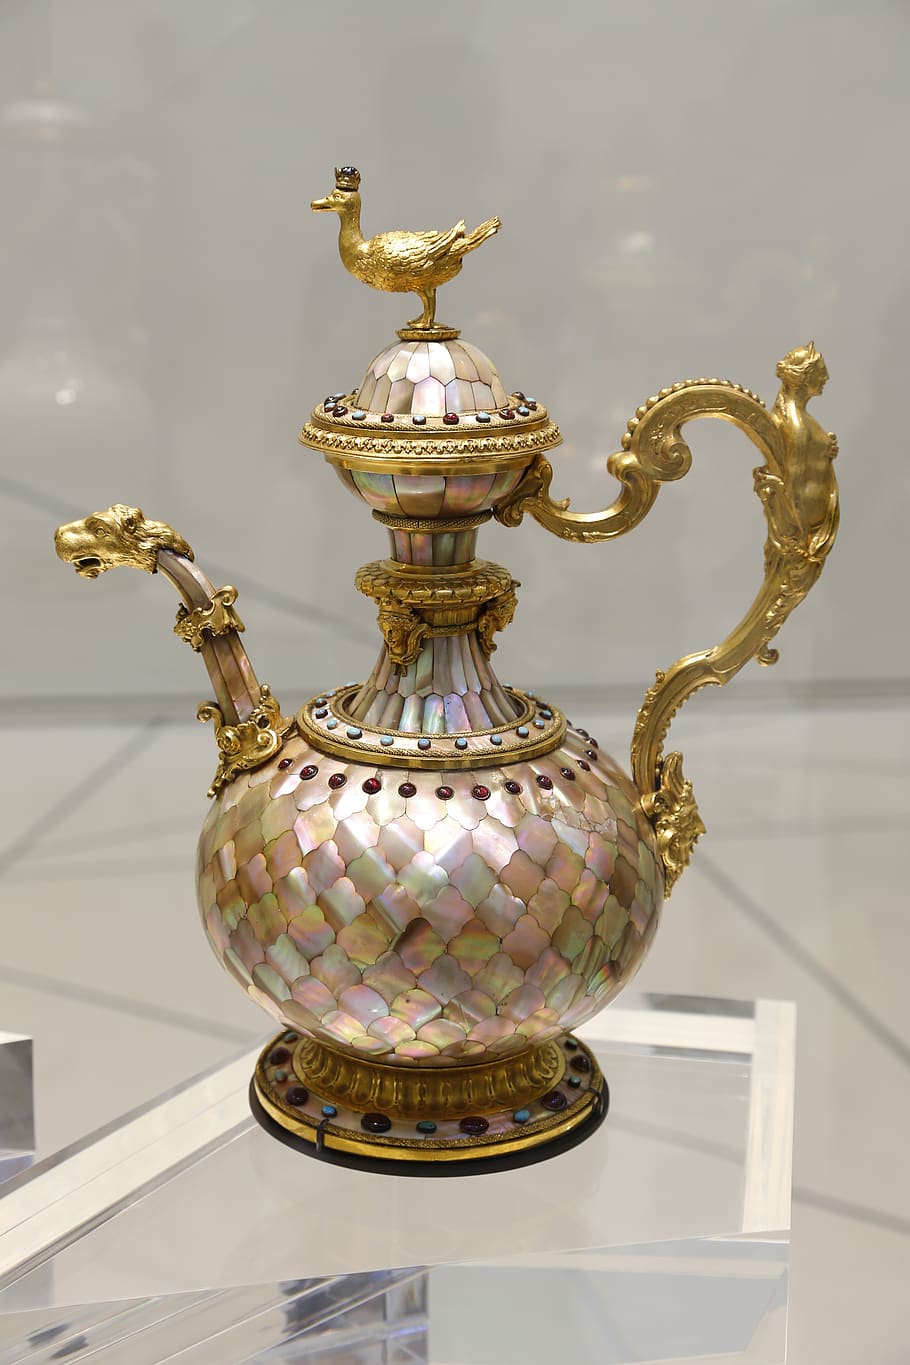 ketel arab, ketel, ketel antik, teko kopi, teko arab kuningan emas, dalam ruangan, masih hidup, antik, tidak ada orang, meja